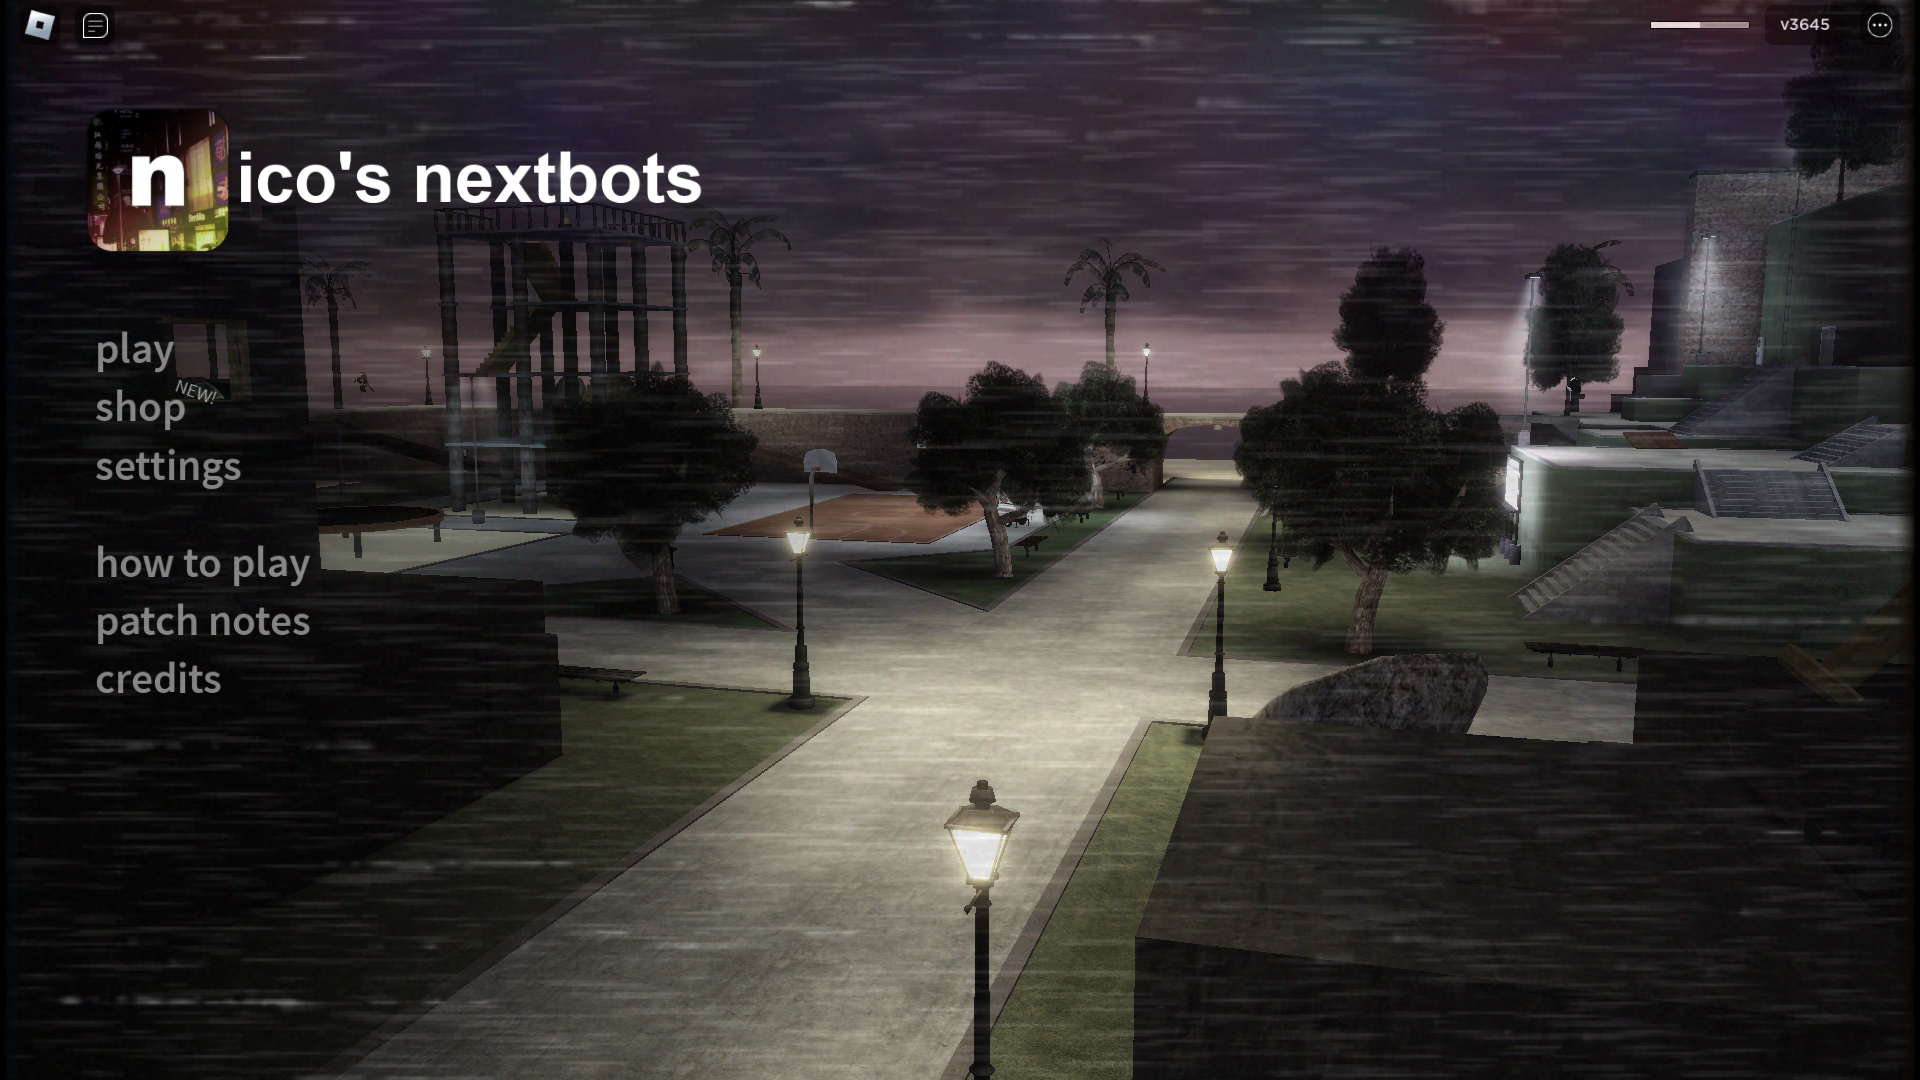 The Nico's Nextbot ADMIN Experience